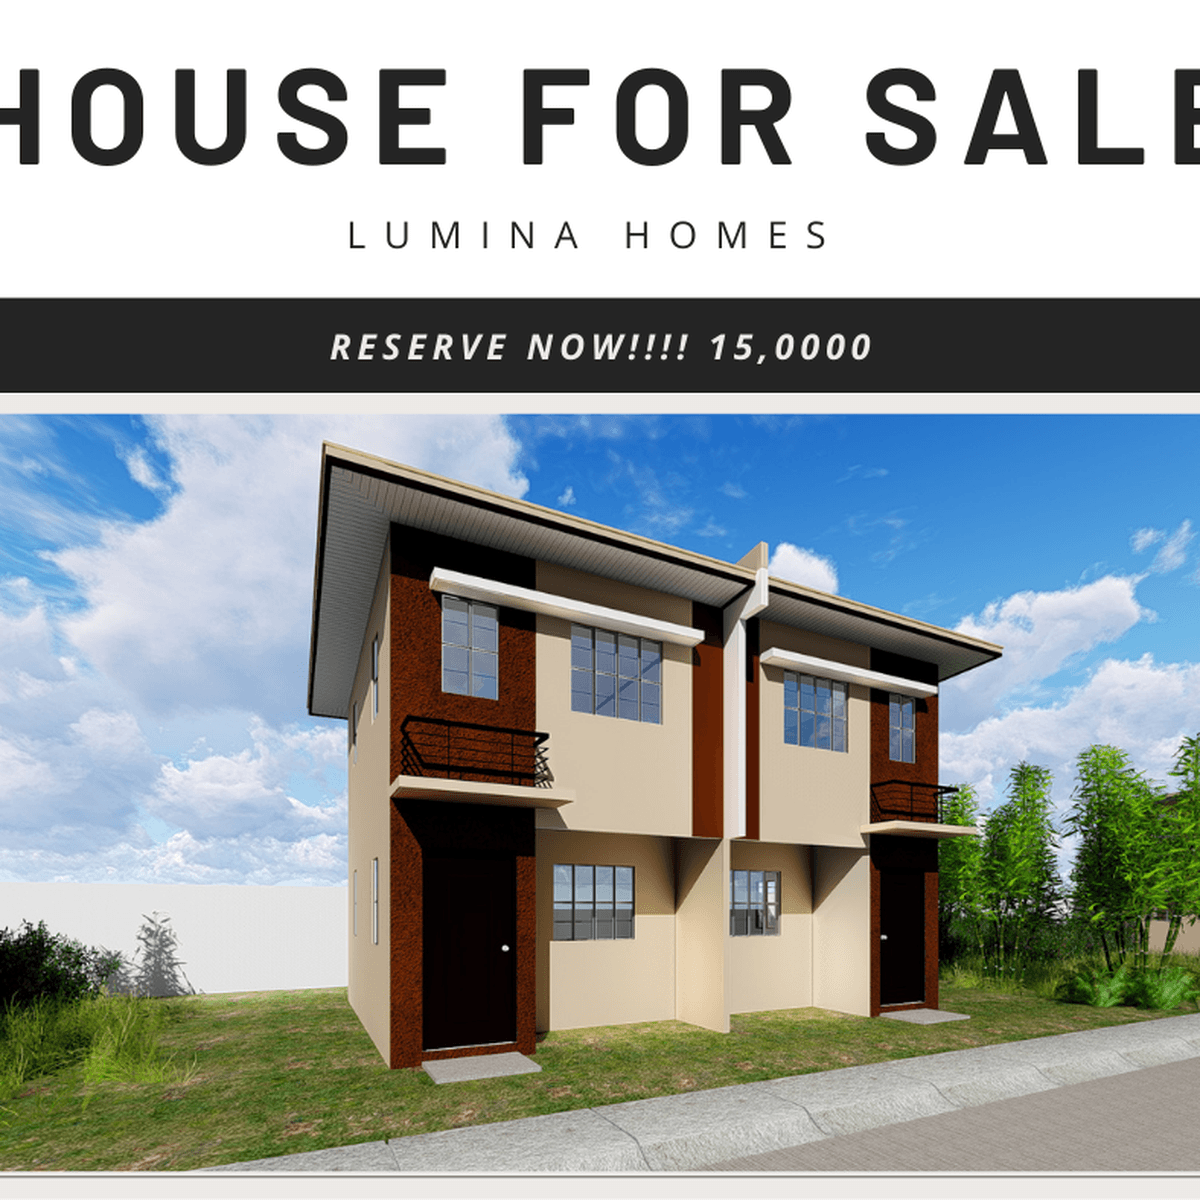 3-bedroom Duplex / Twin House For Sale in Bauan Batangas